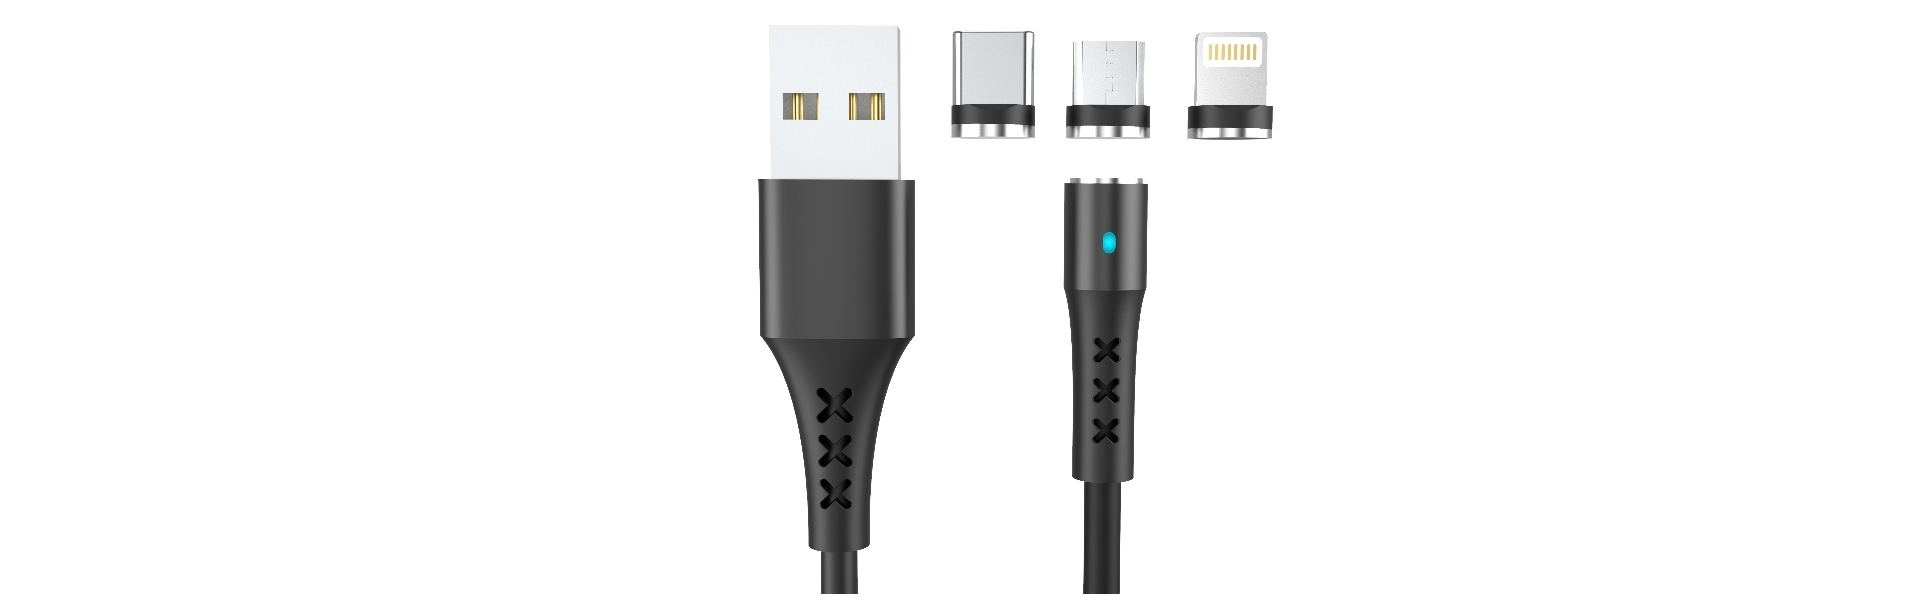 USB-Kabel, USB-Kabel, Datenkabel, Datenkabel,Dong Guan Rong Pin Electronic Technology Co.Ltd